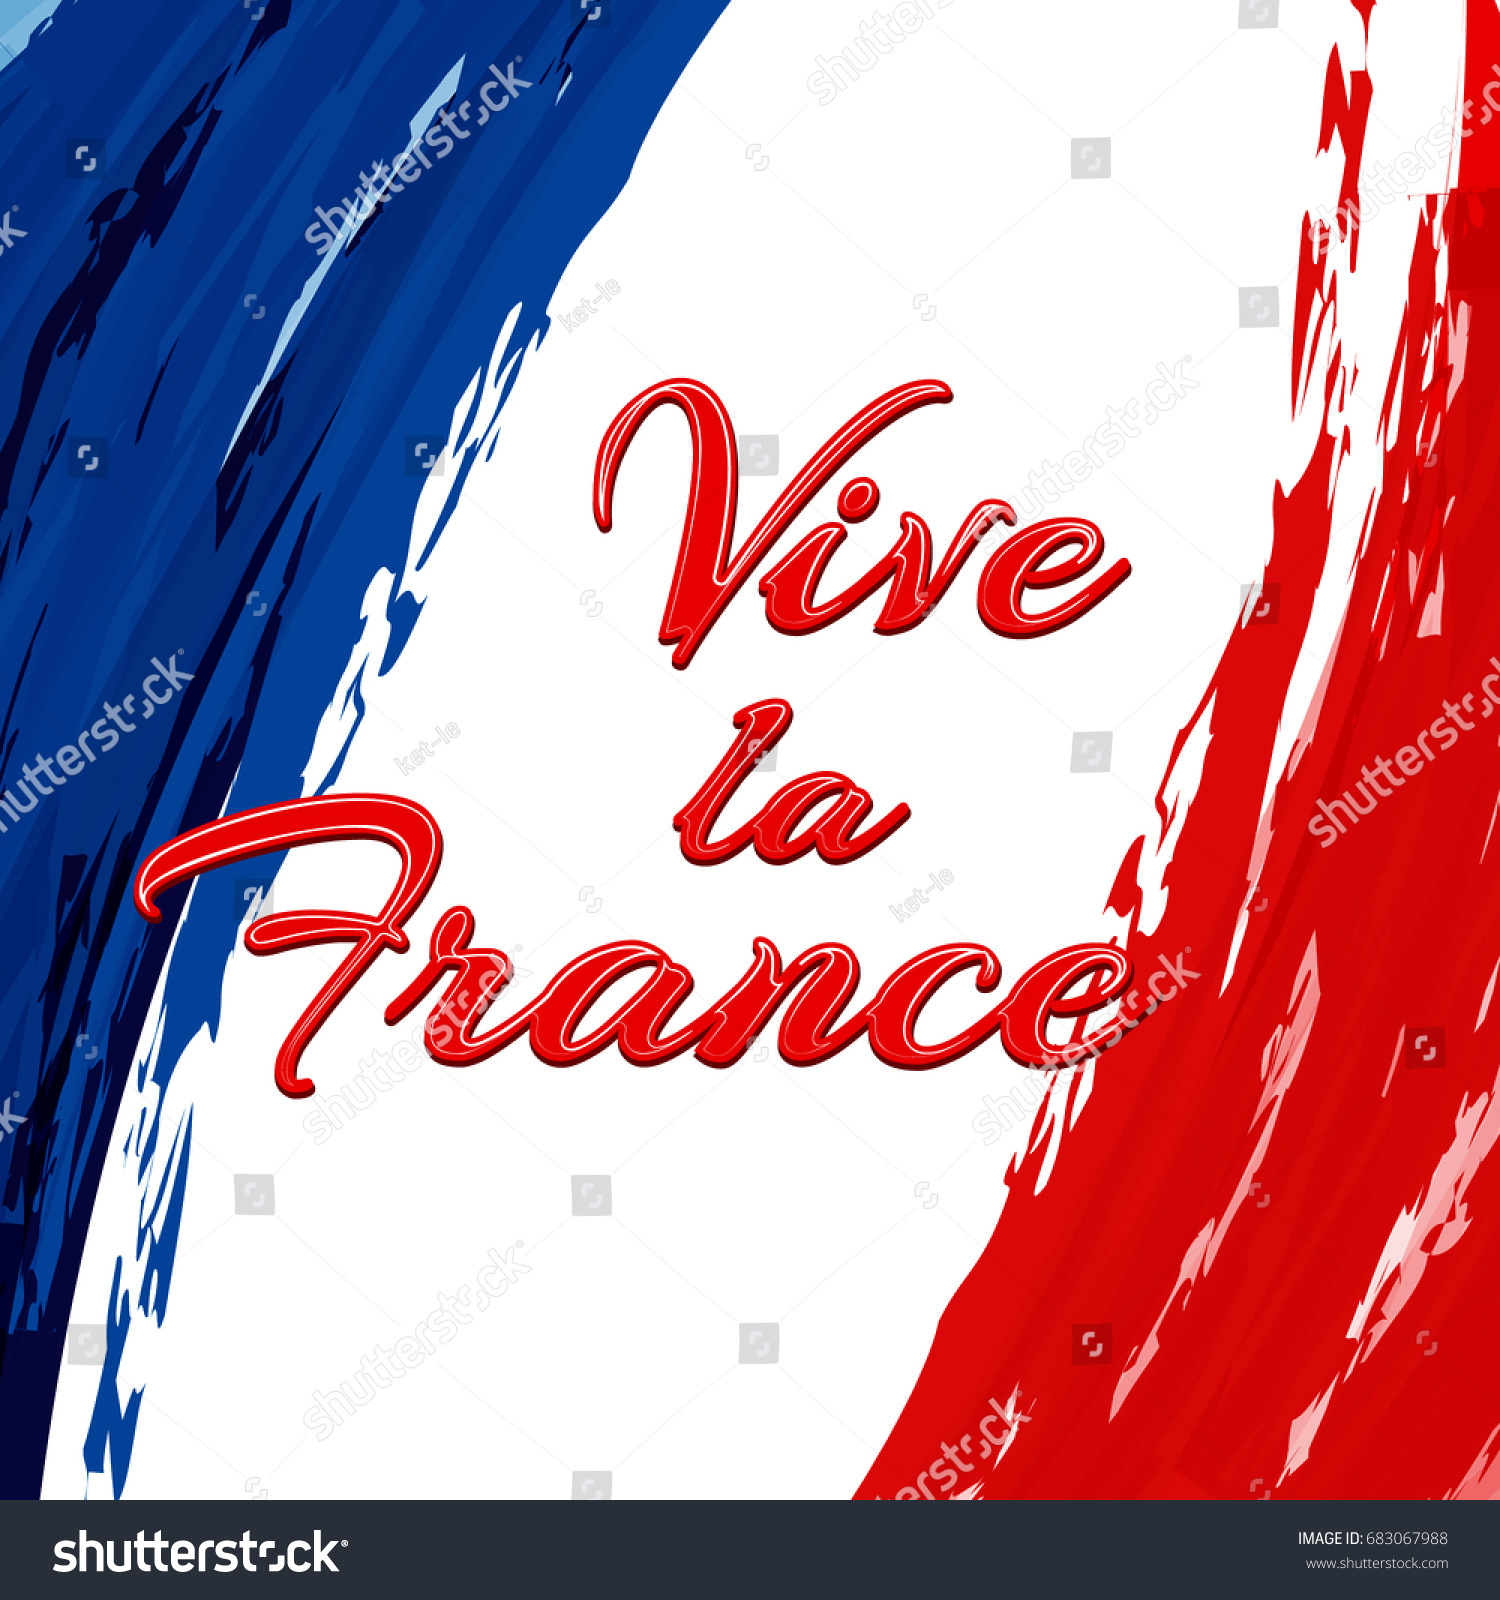 Inscription Vive La France On Background Stock Vector 683067988 ...